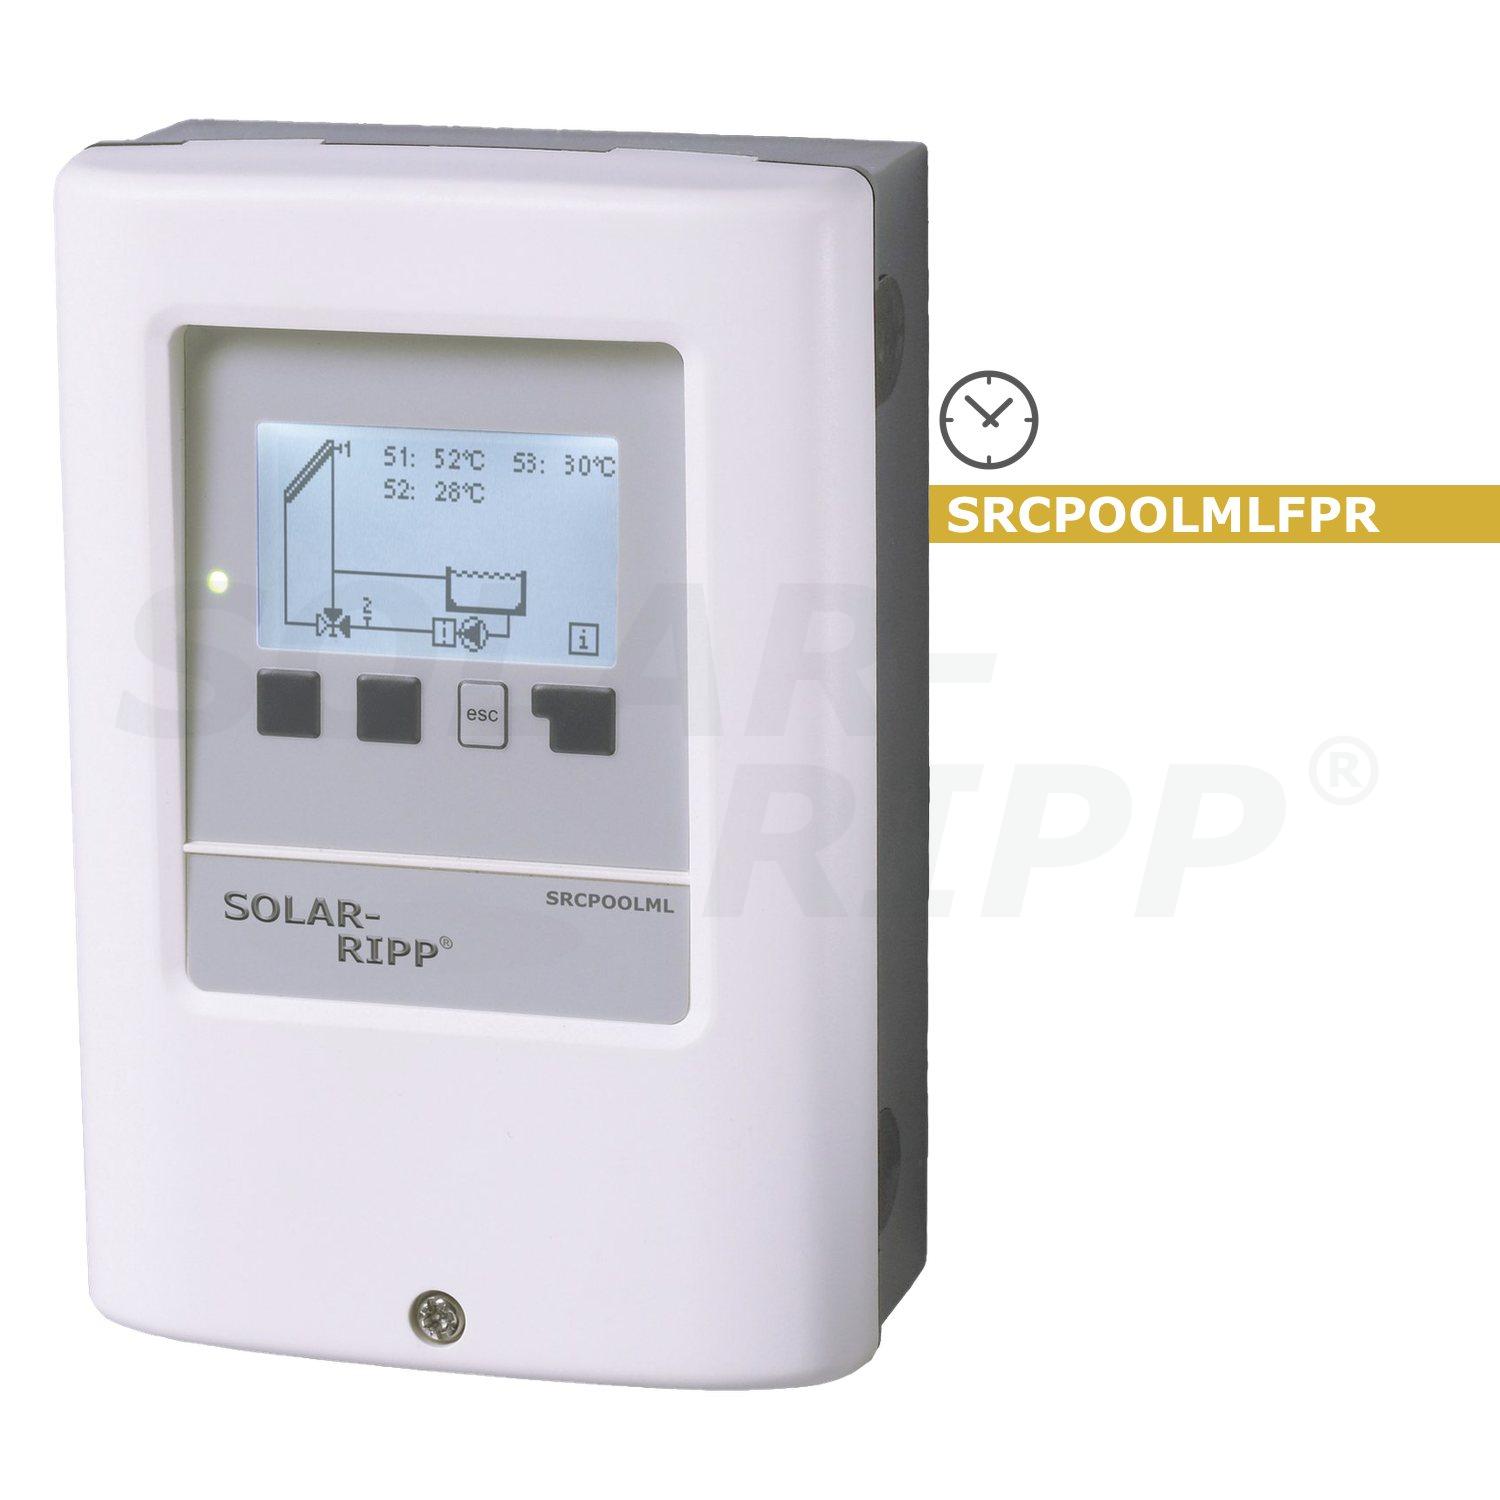 SOLAR-RIPP ® solar controller SRCPOOLMLFPR